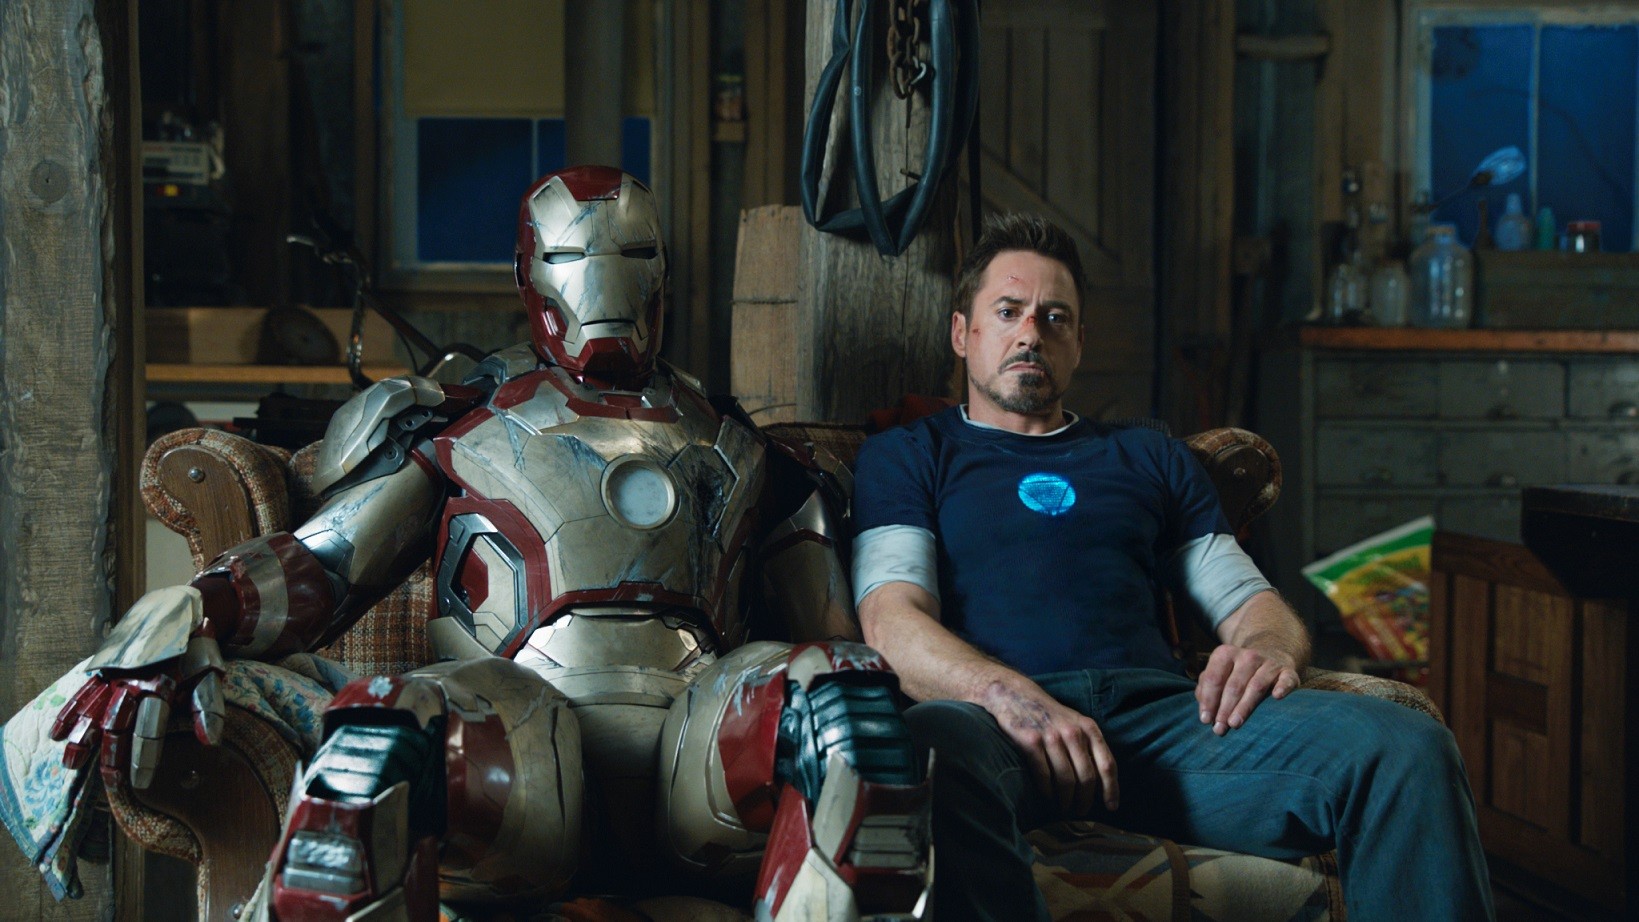 People 1639x922 Tony Stark Iron Man 3 Robert Downey Jr. film stills movies Marvel Cinematic Universe men